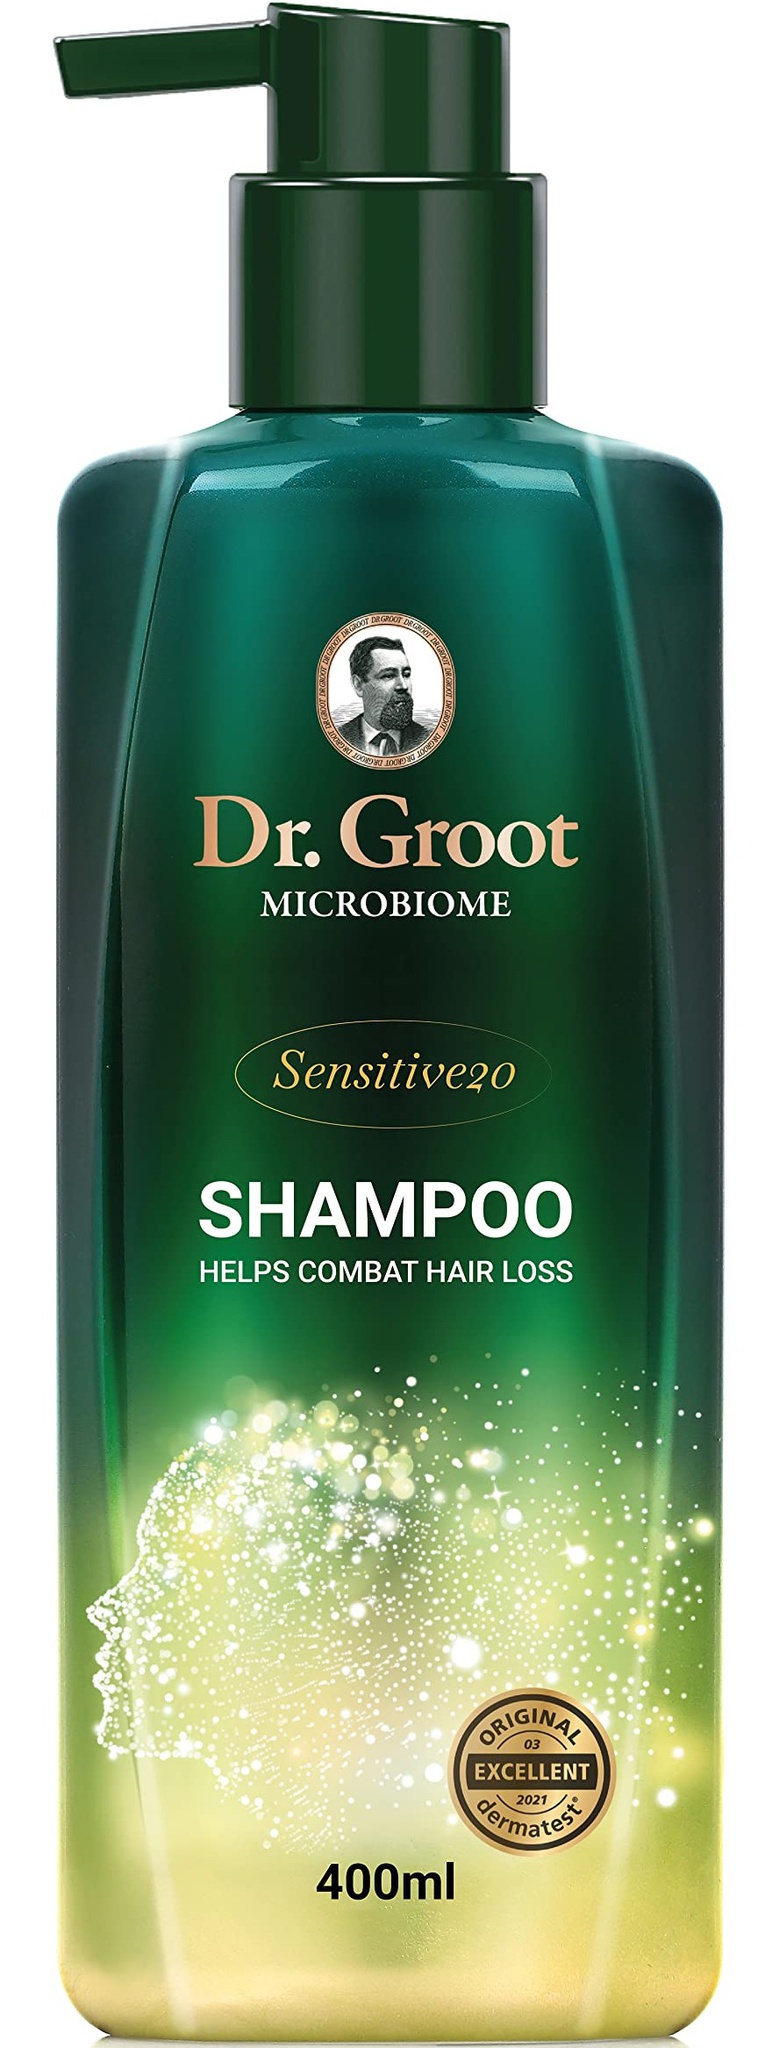 DR GROOT Sensitive20 Microbiome Shampoo